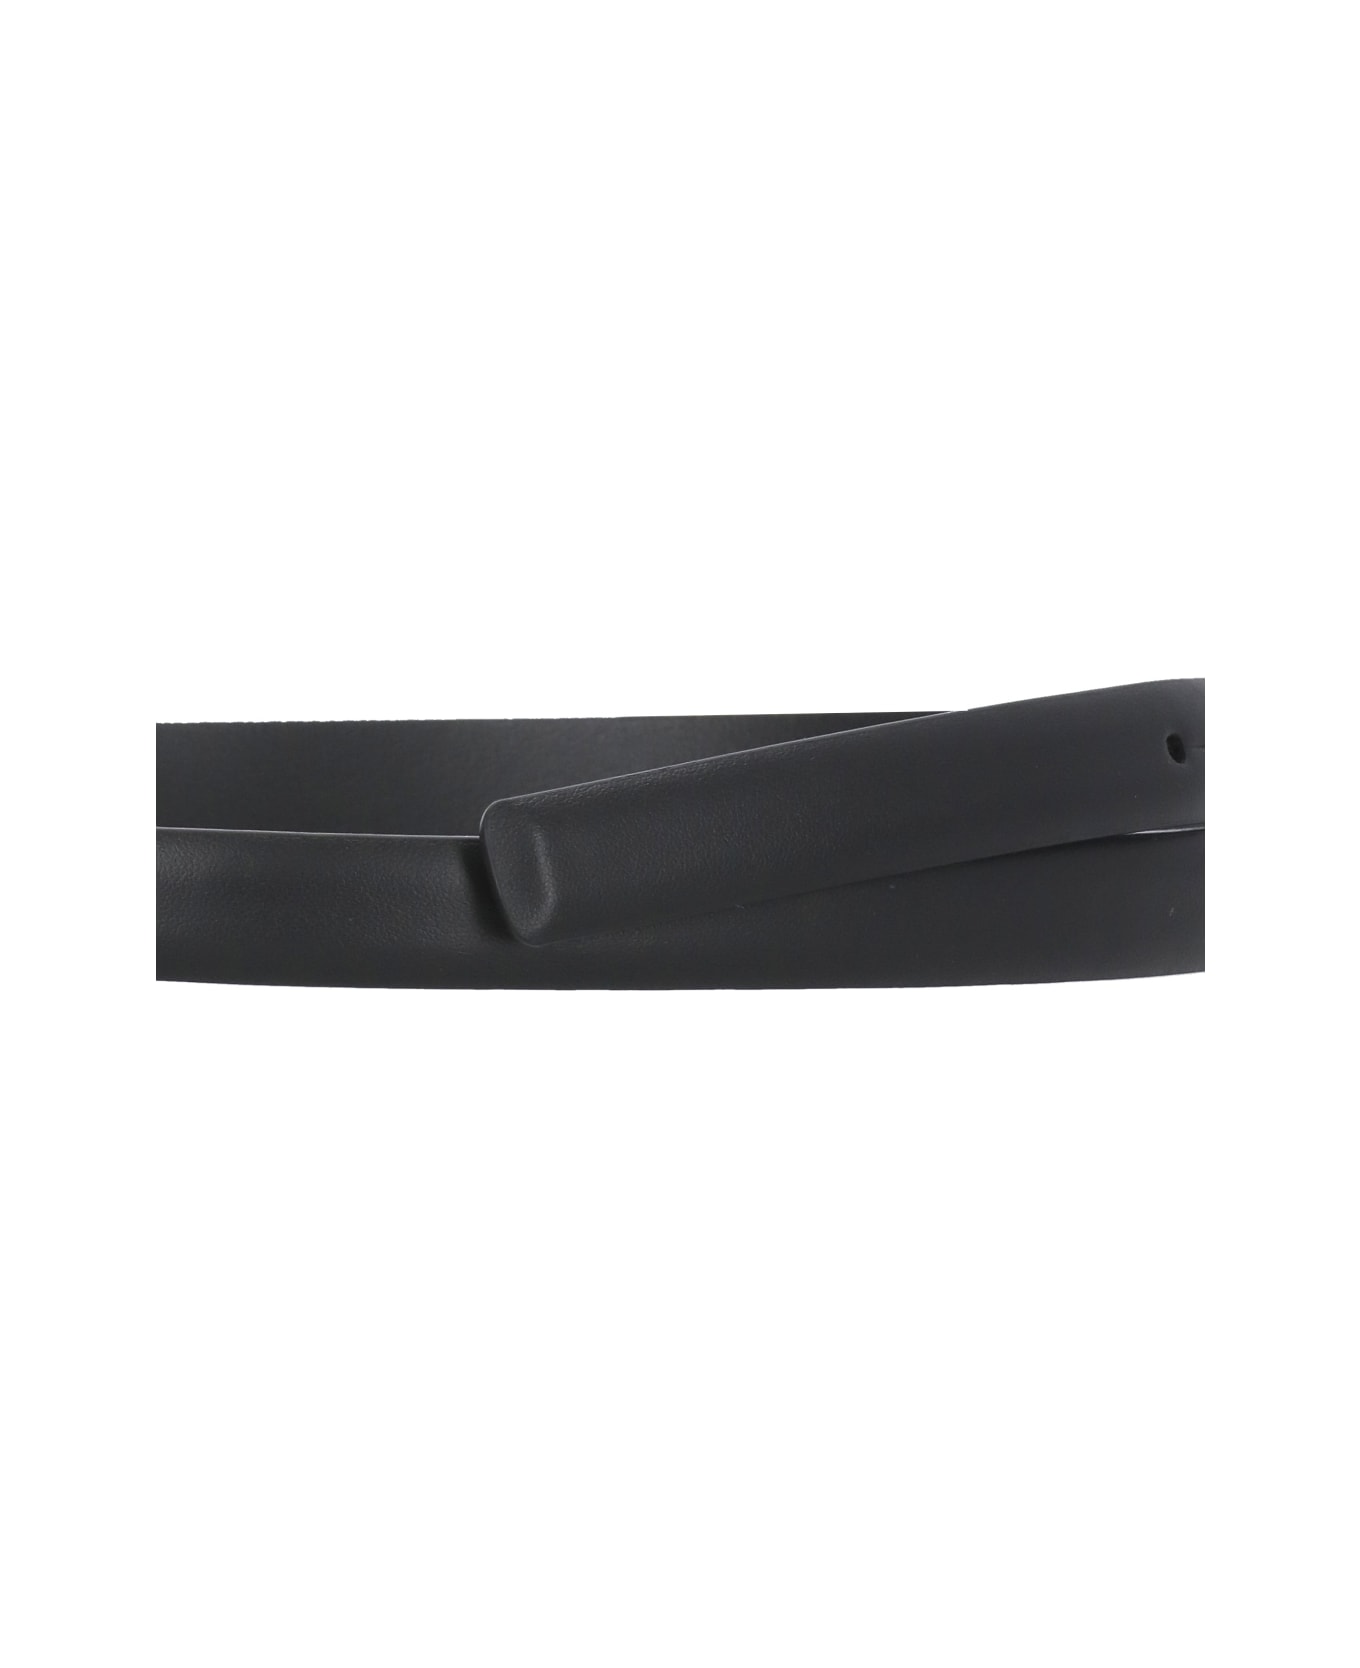 Moschino Logo Belt - Black